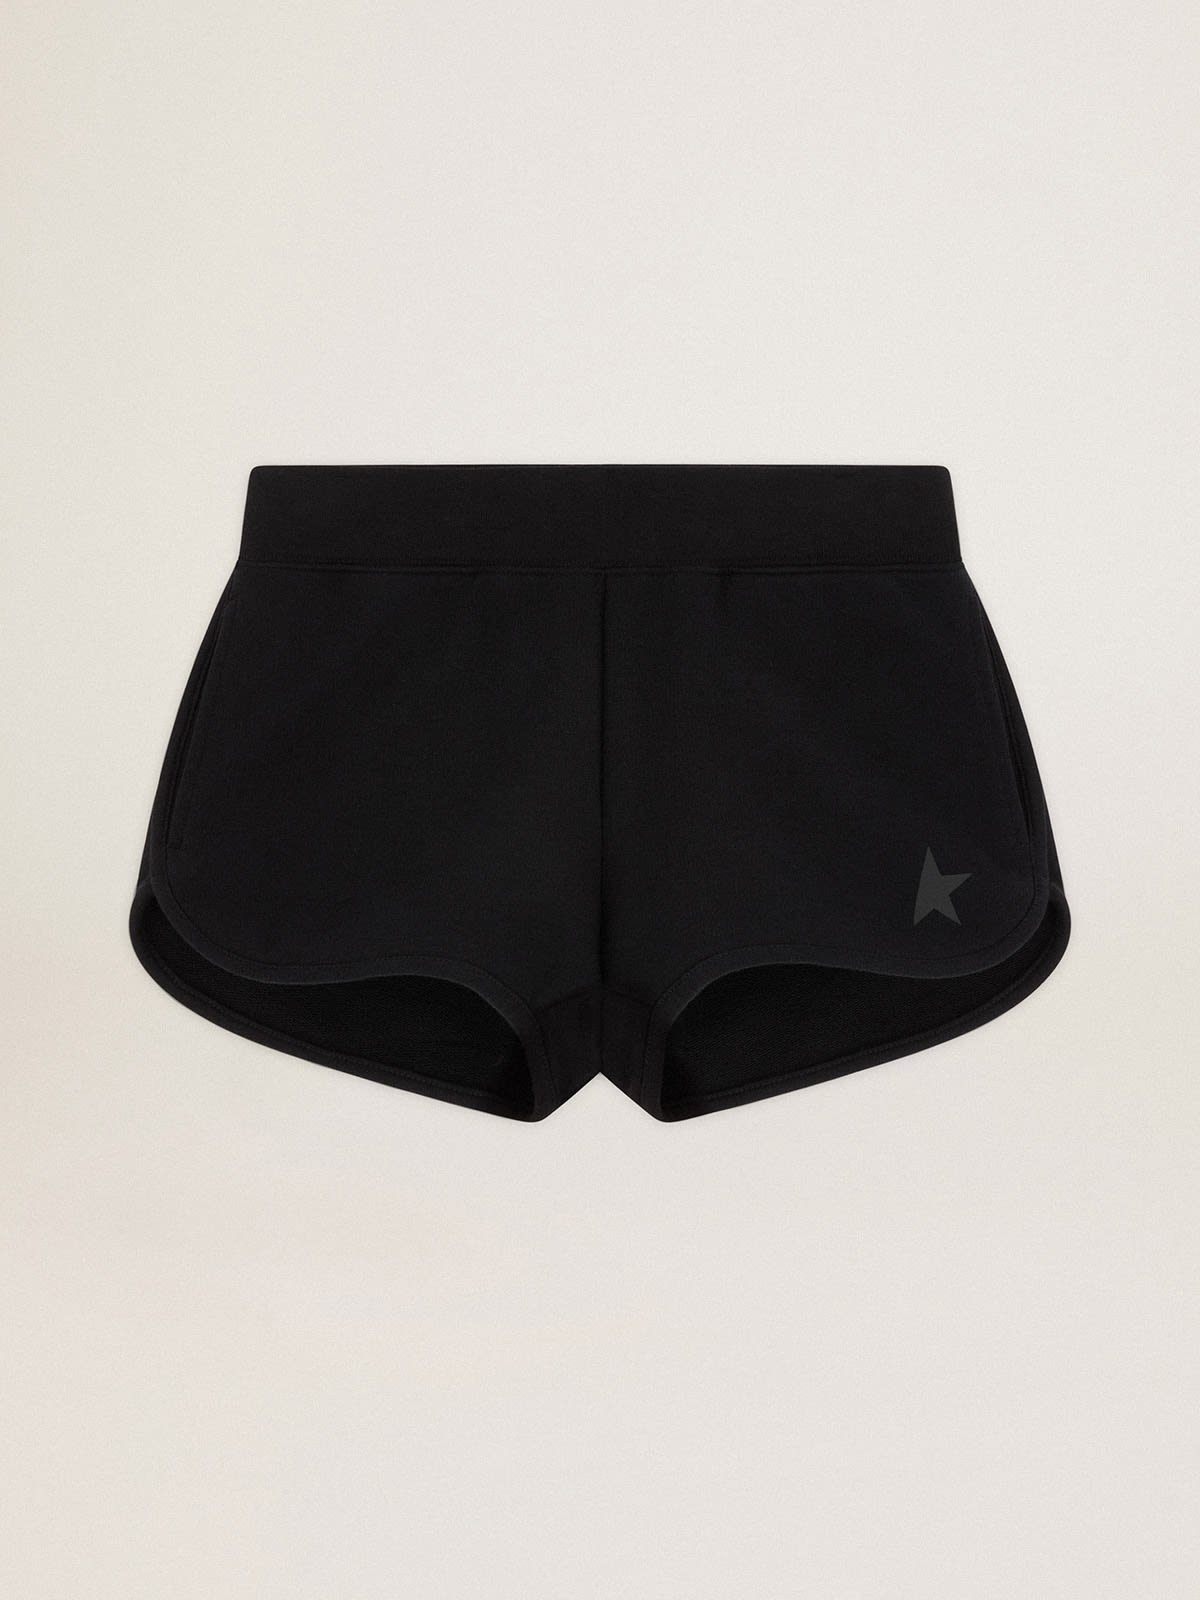 Golden Goose - Pantalones cortos negros con estrella tono sobre tono para mujer in 